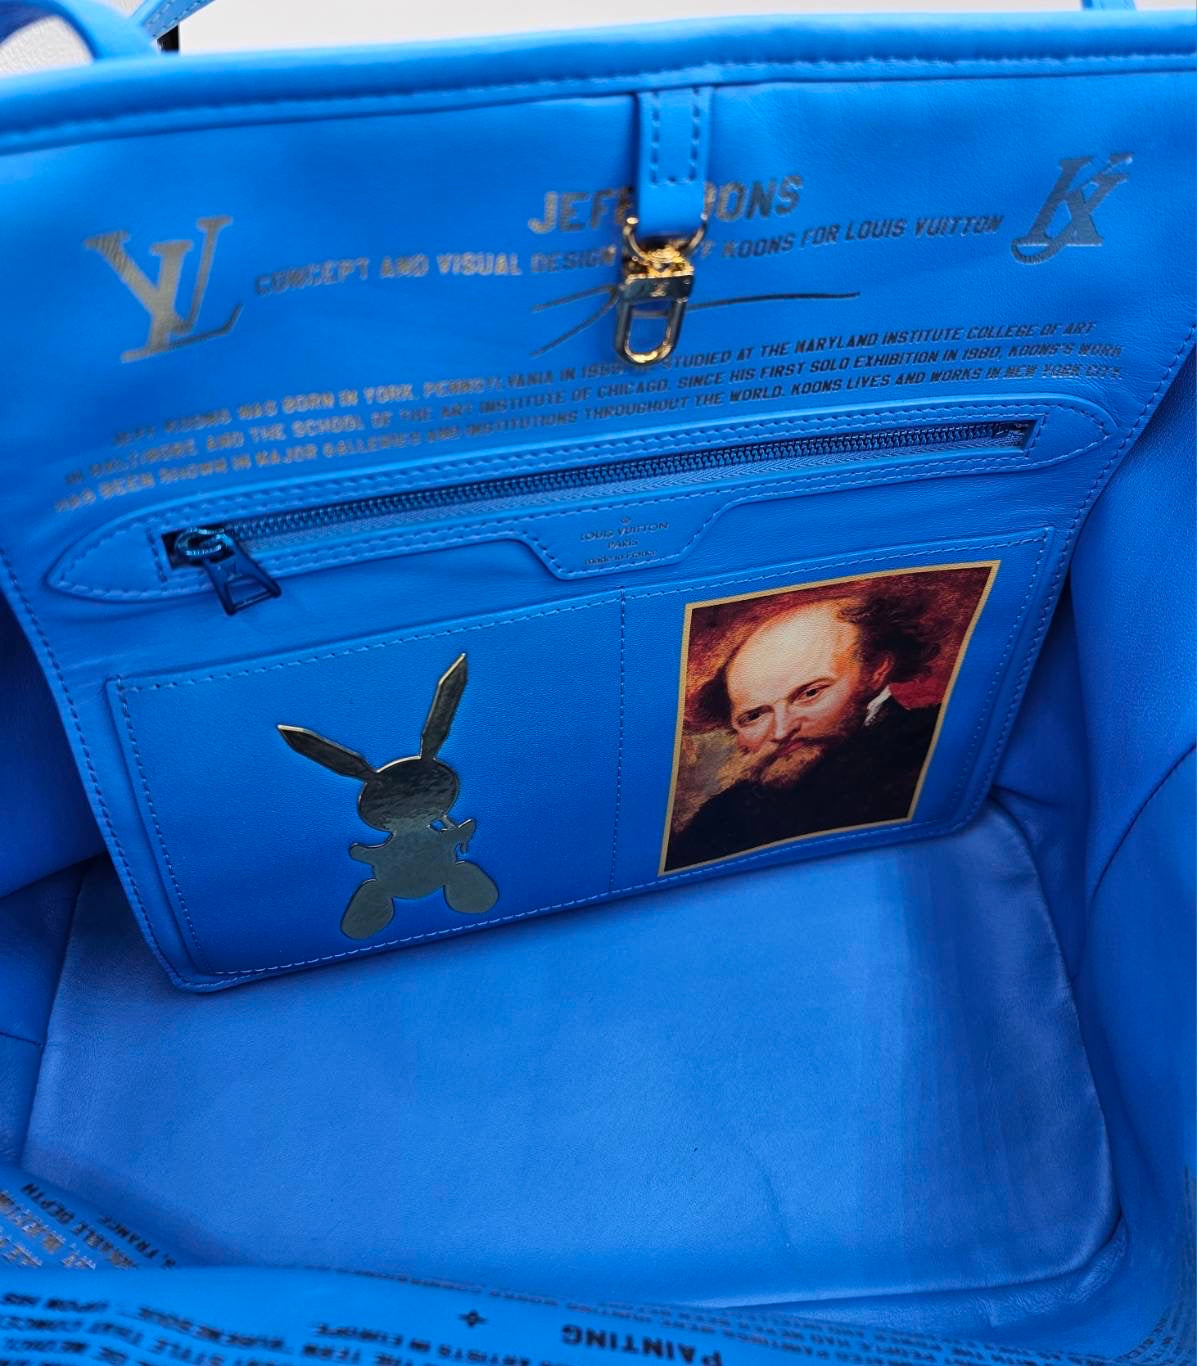 Louis Vuitton Ltd. Ed. Neverfull Jeff Koons Rubens Mm in Blue